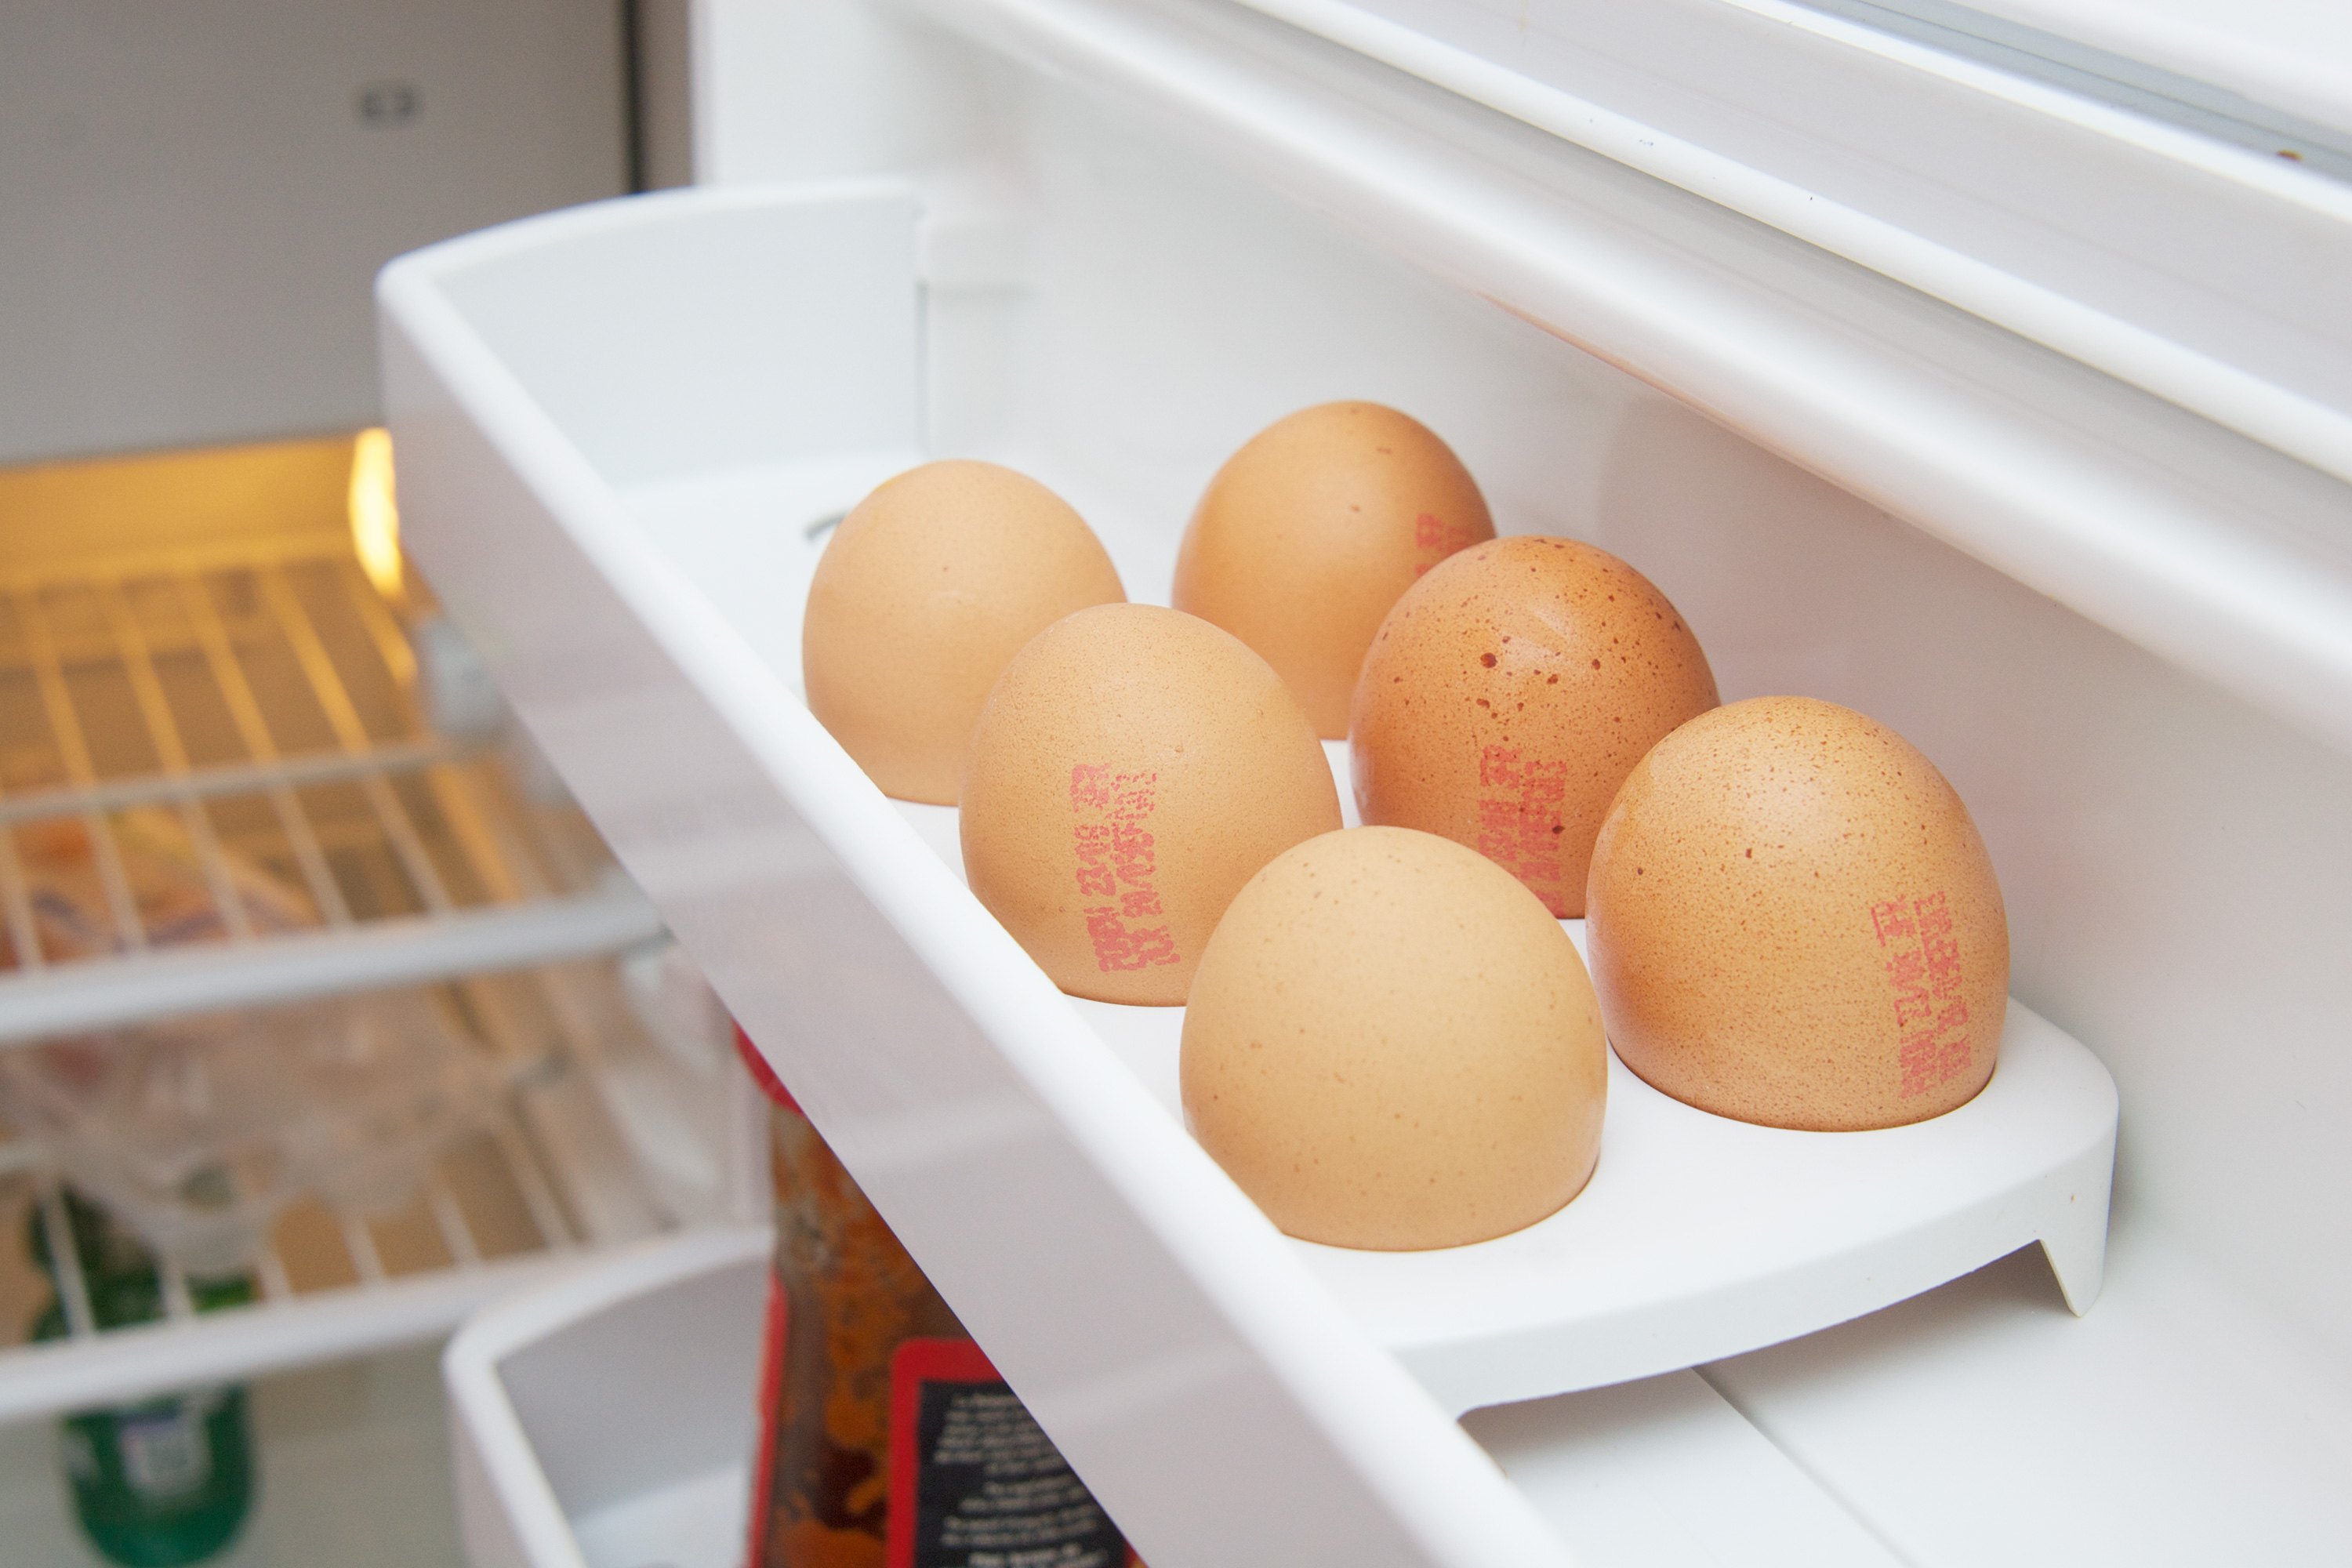 There are some eggs in the fridge. Подставка для яиц в холодильник. Яйца в холодильнике. Контейнер для яиц в холодильник. Вкладыш для яиц в холодильник.